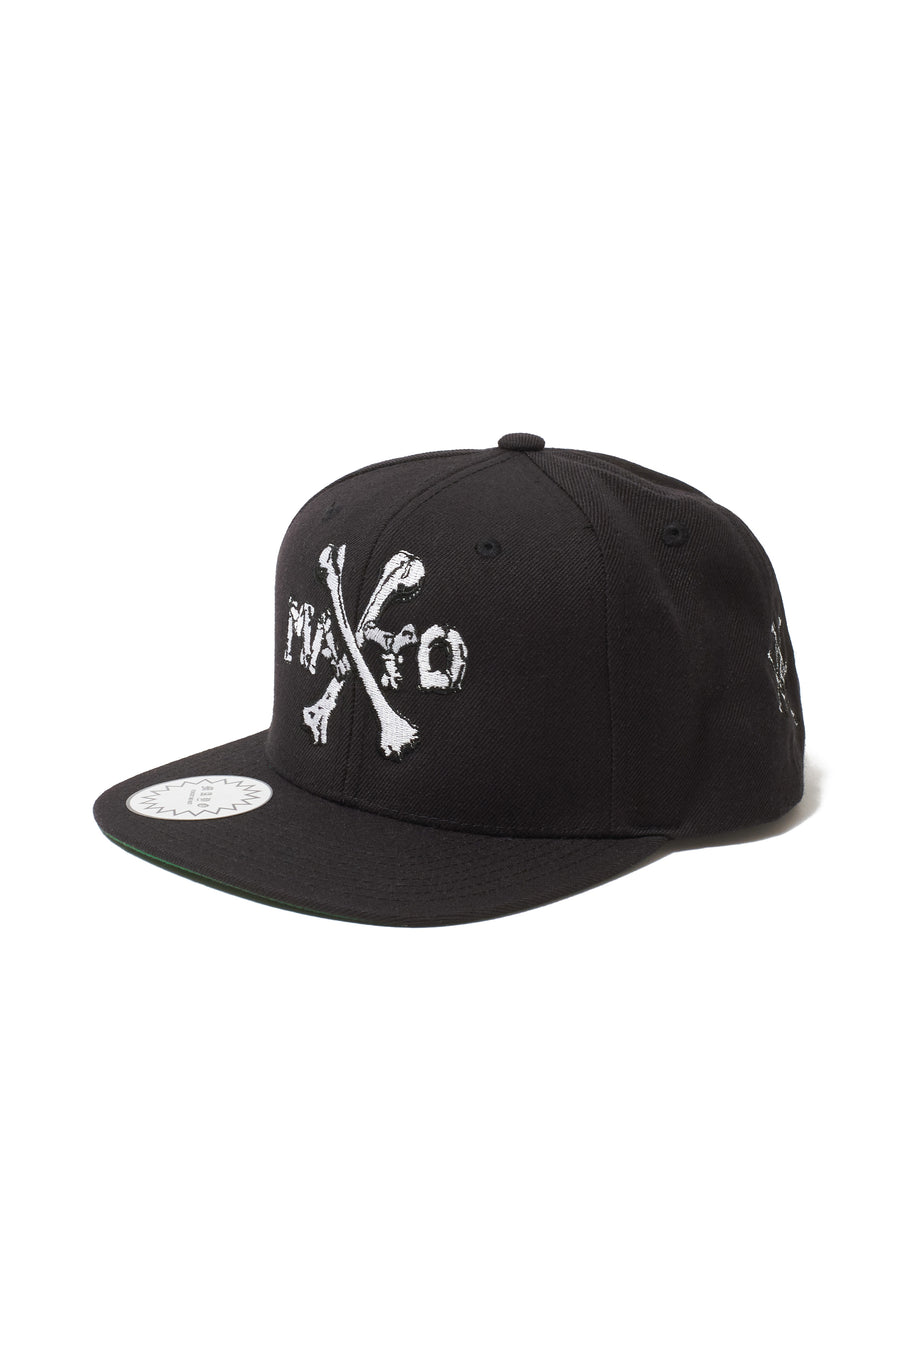 【WEB LIMITED】MAYO CROSS BONE Embroidery CAP - BLACK